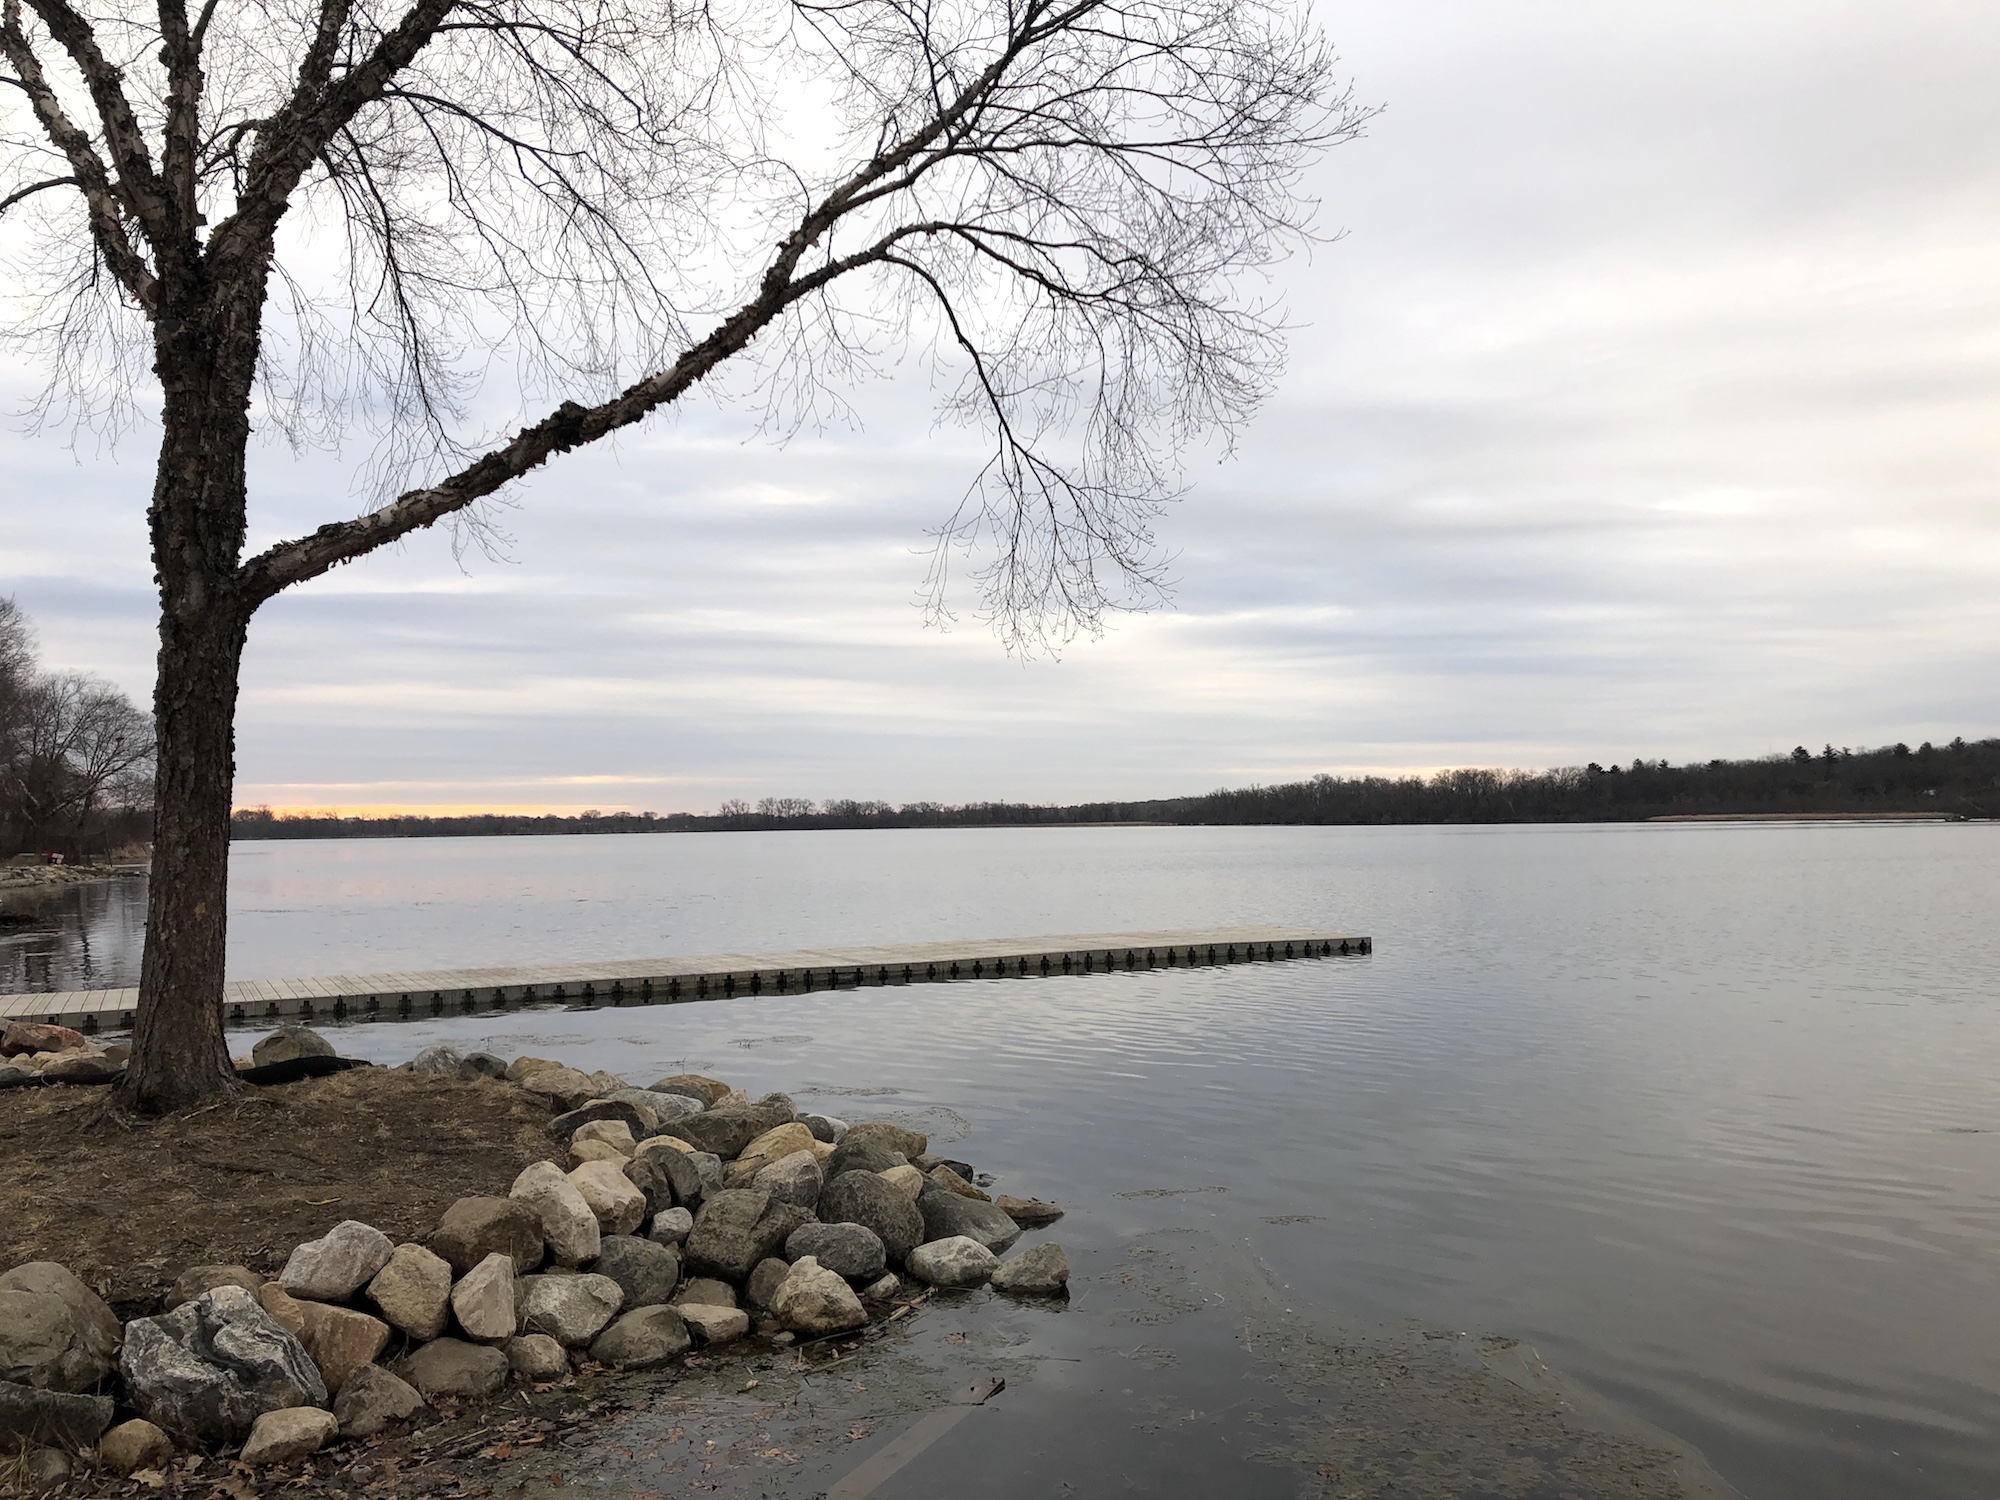 Lake Wingra on April 1, 2019.